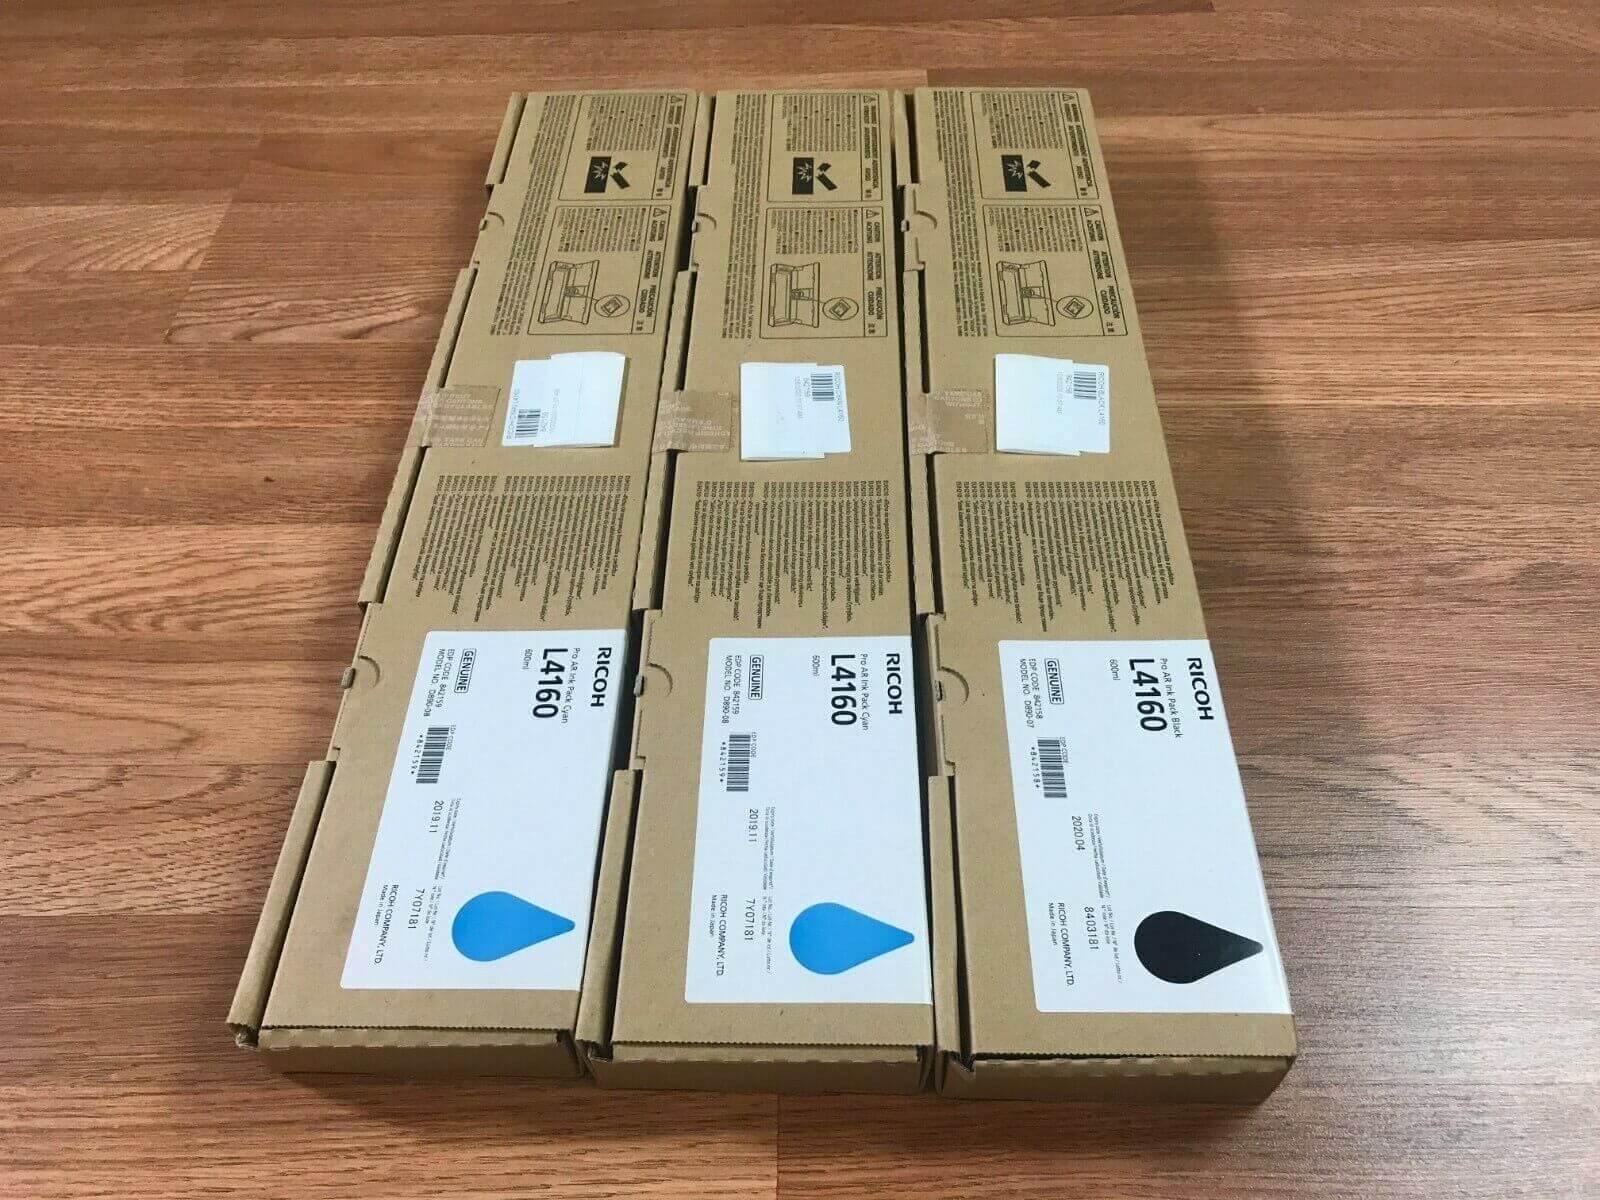 3 Ricoh Pro Ink Pack L4160 CCK 600ml EDP:842159, 842158 Exp.2019-2020 FedEx 2Day - copier-clearance-center